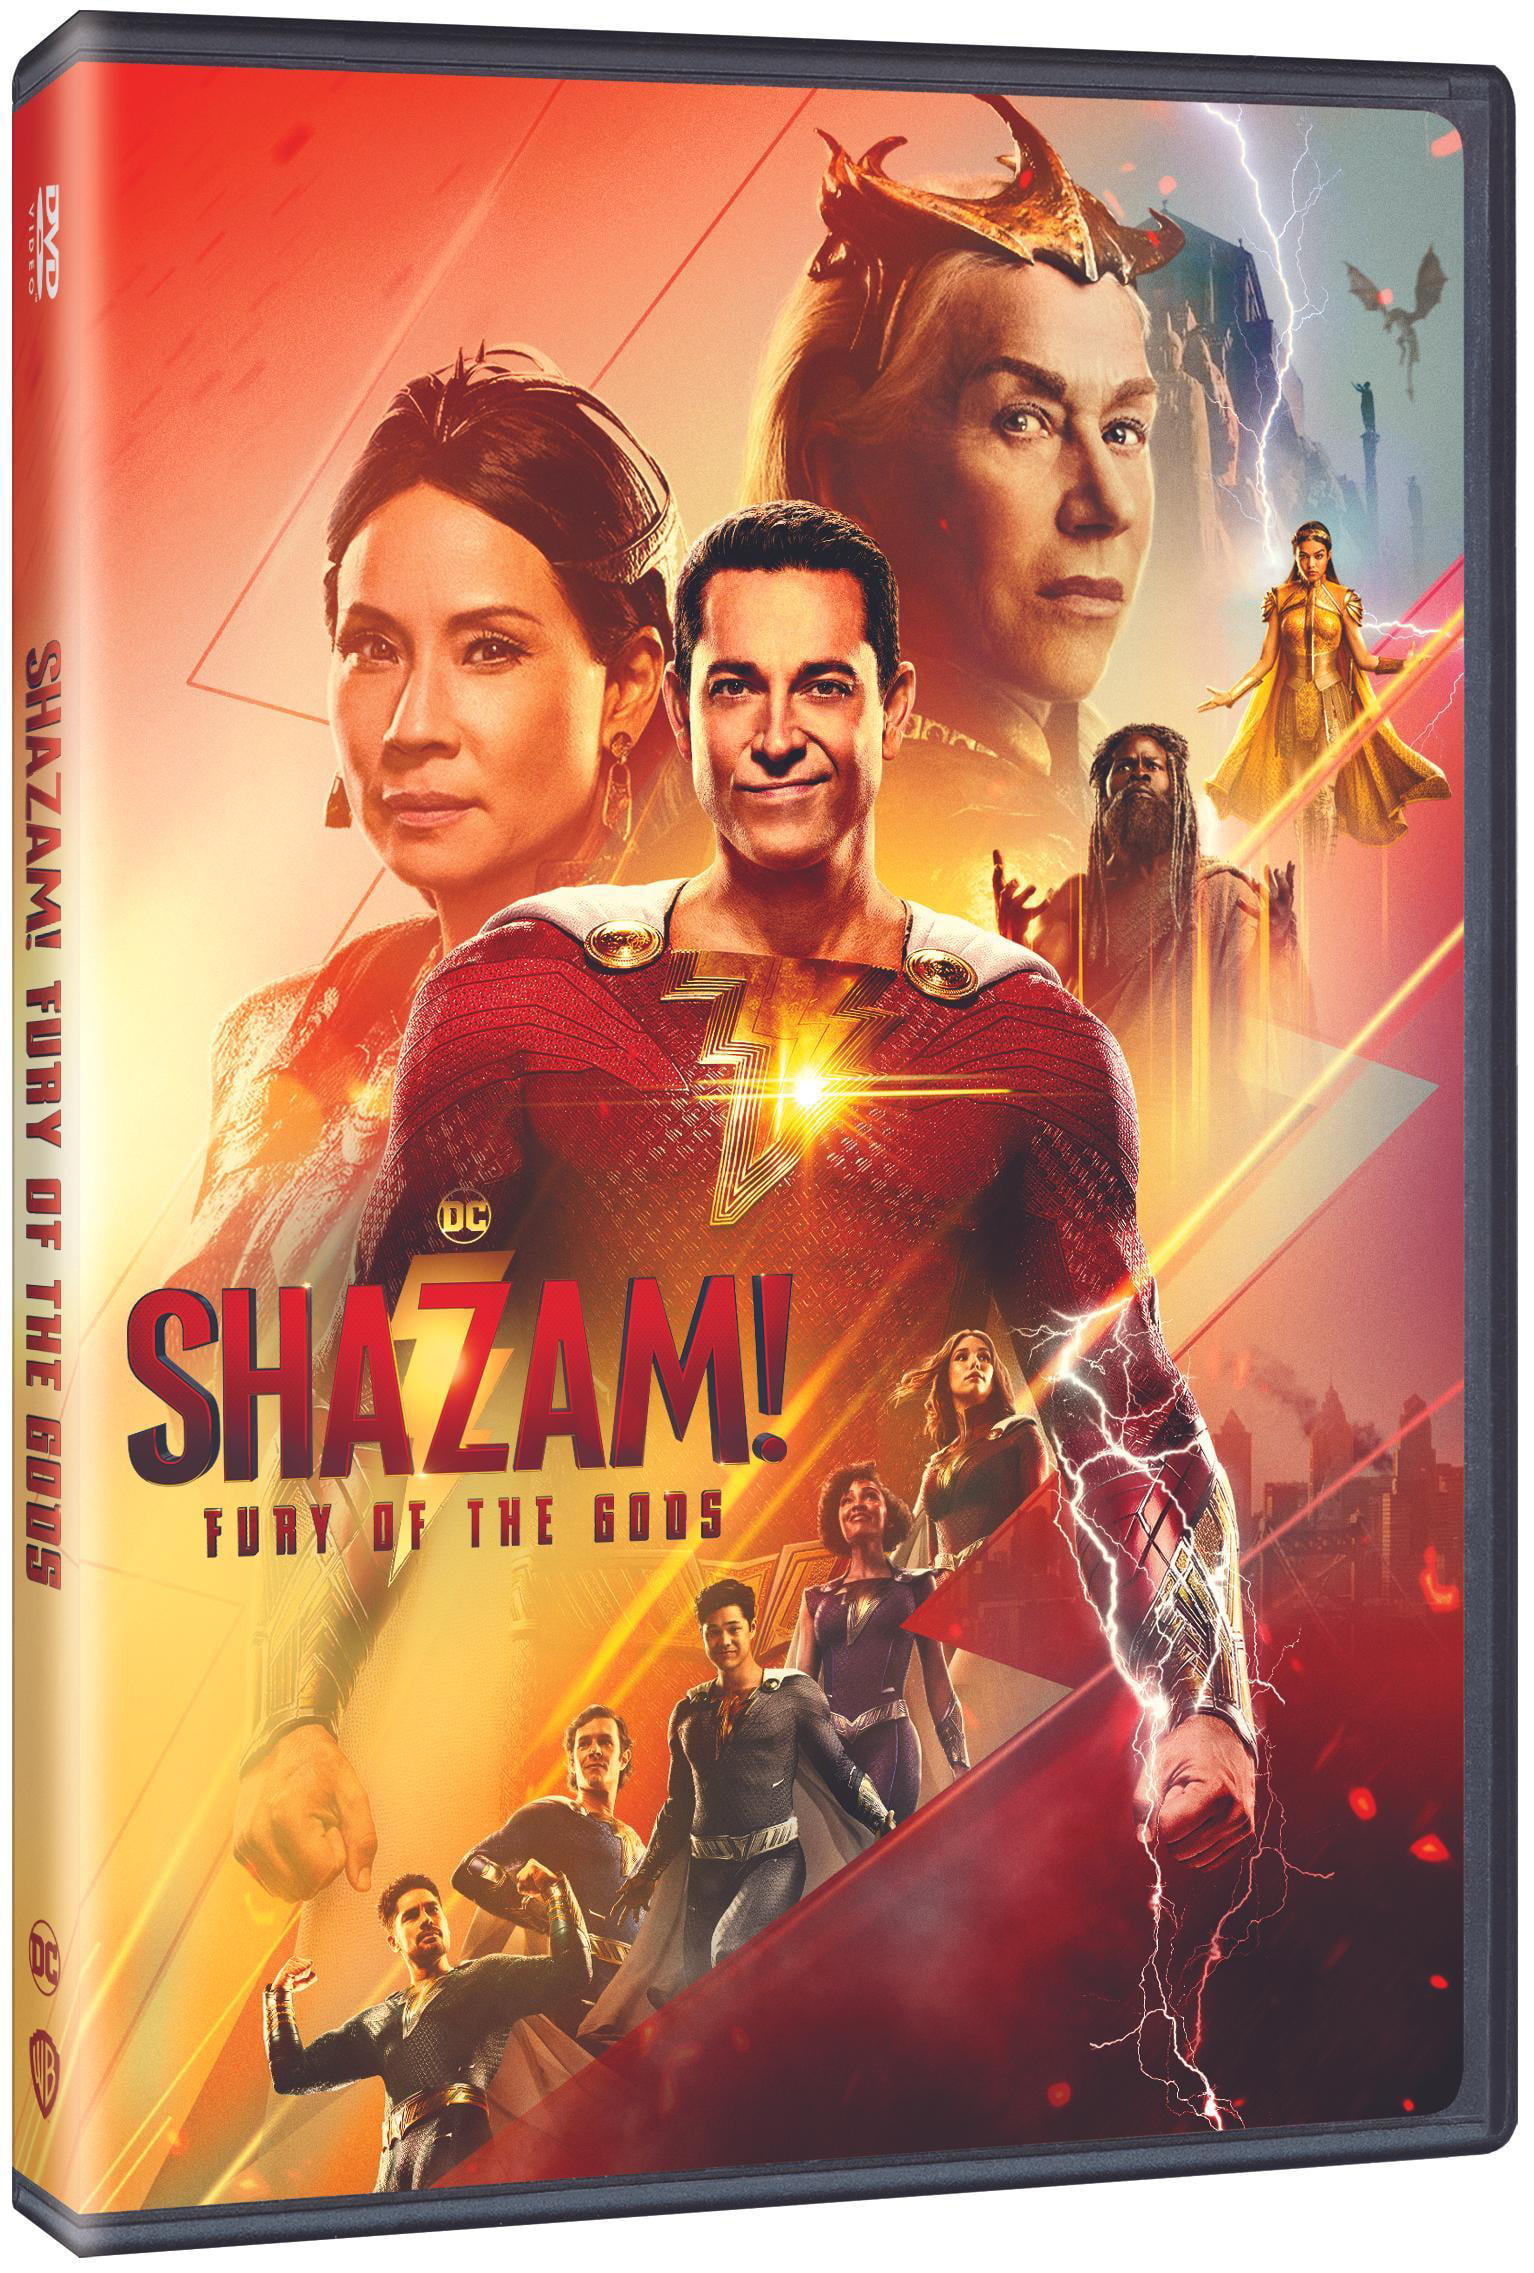 REVIEW: “Shazam! Fury of the Gods” (2023)